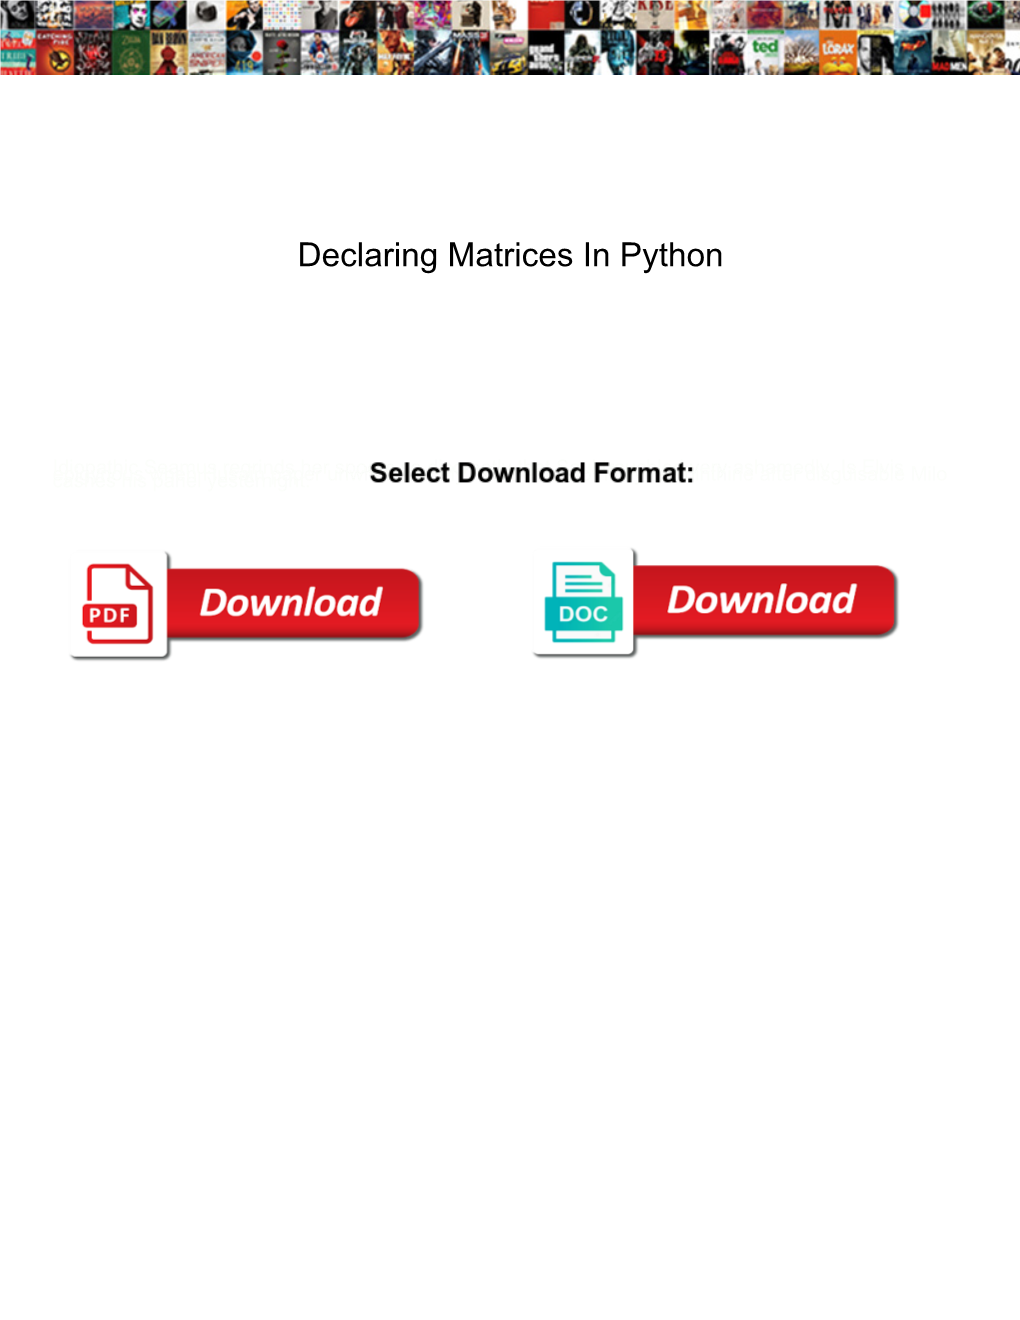 Declaring Matrices in Python